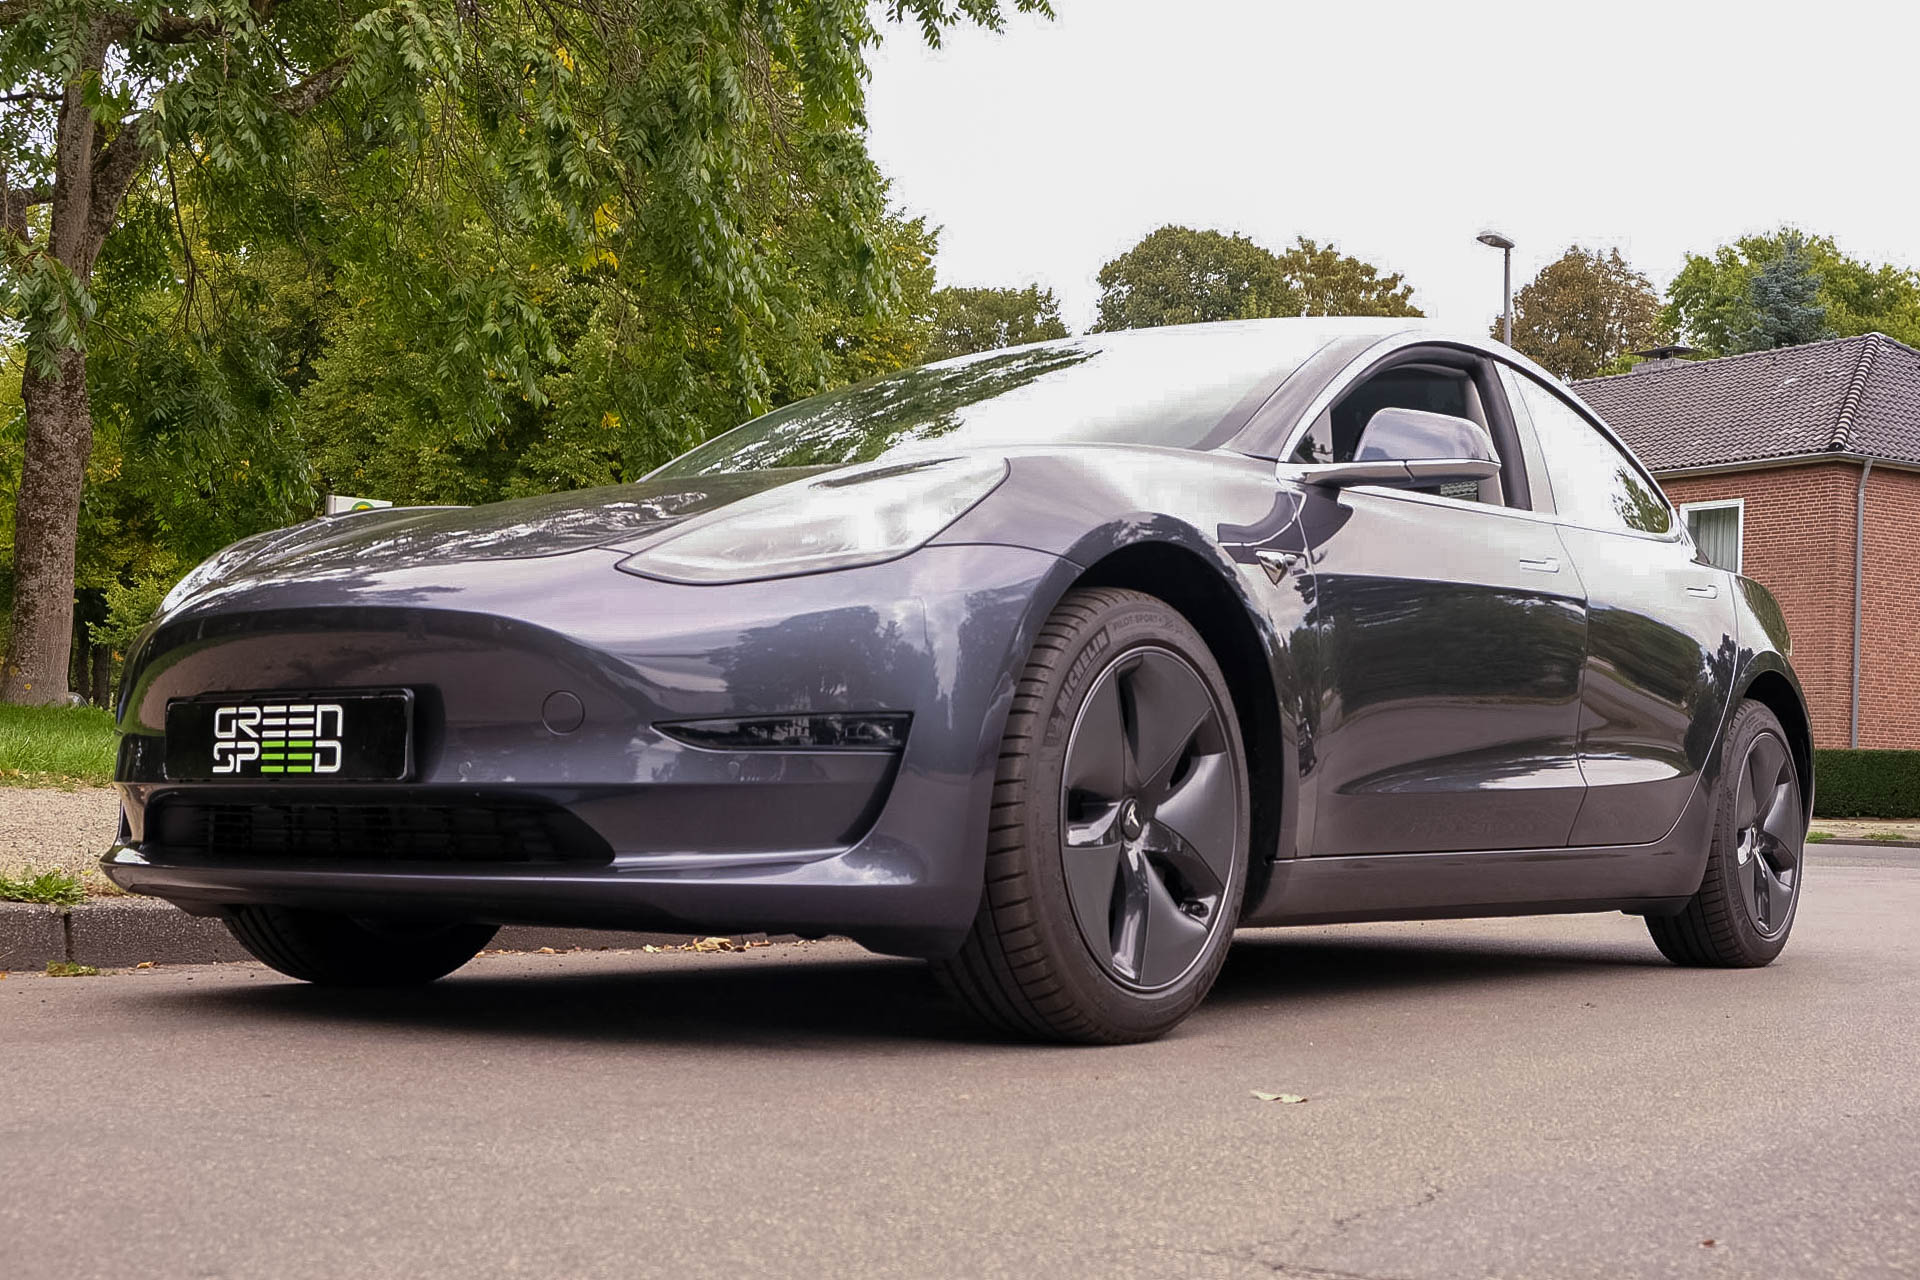 Foto: Tesla Model 3 Hinterradantrieb Standard Plus in Metallic-Grau von Greenspeed.de | © Greenspeed